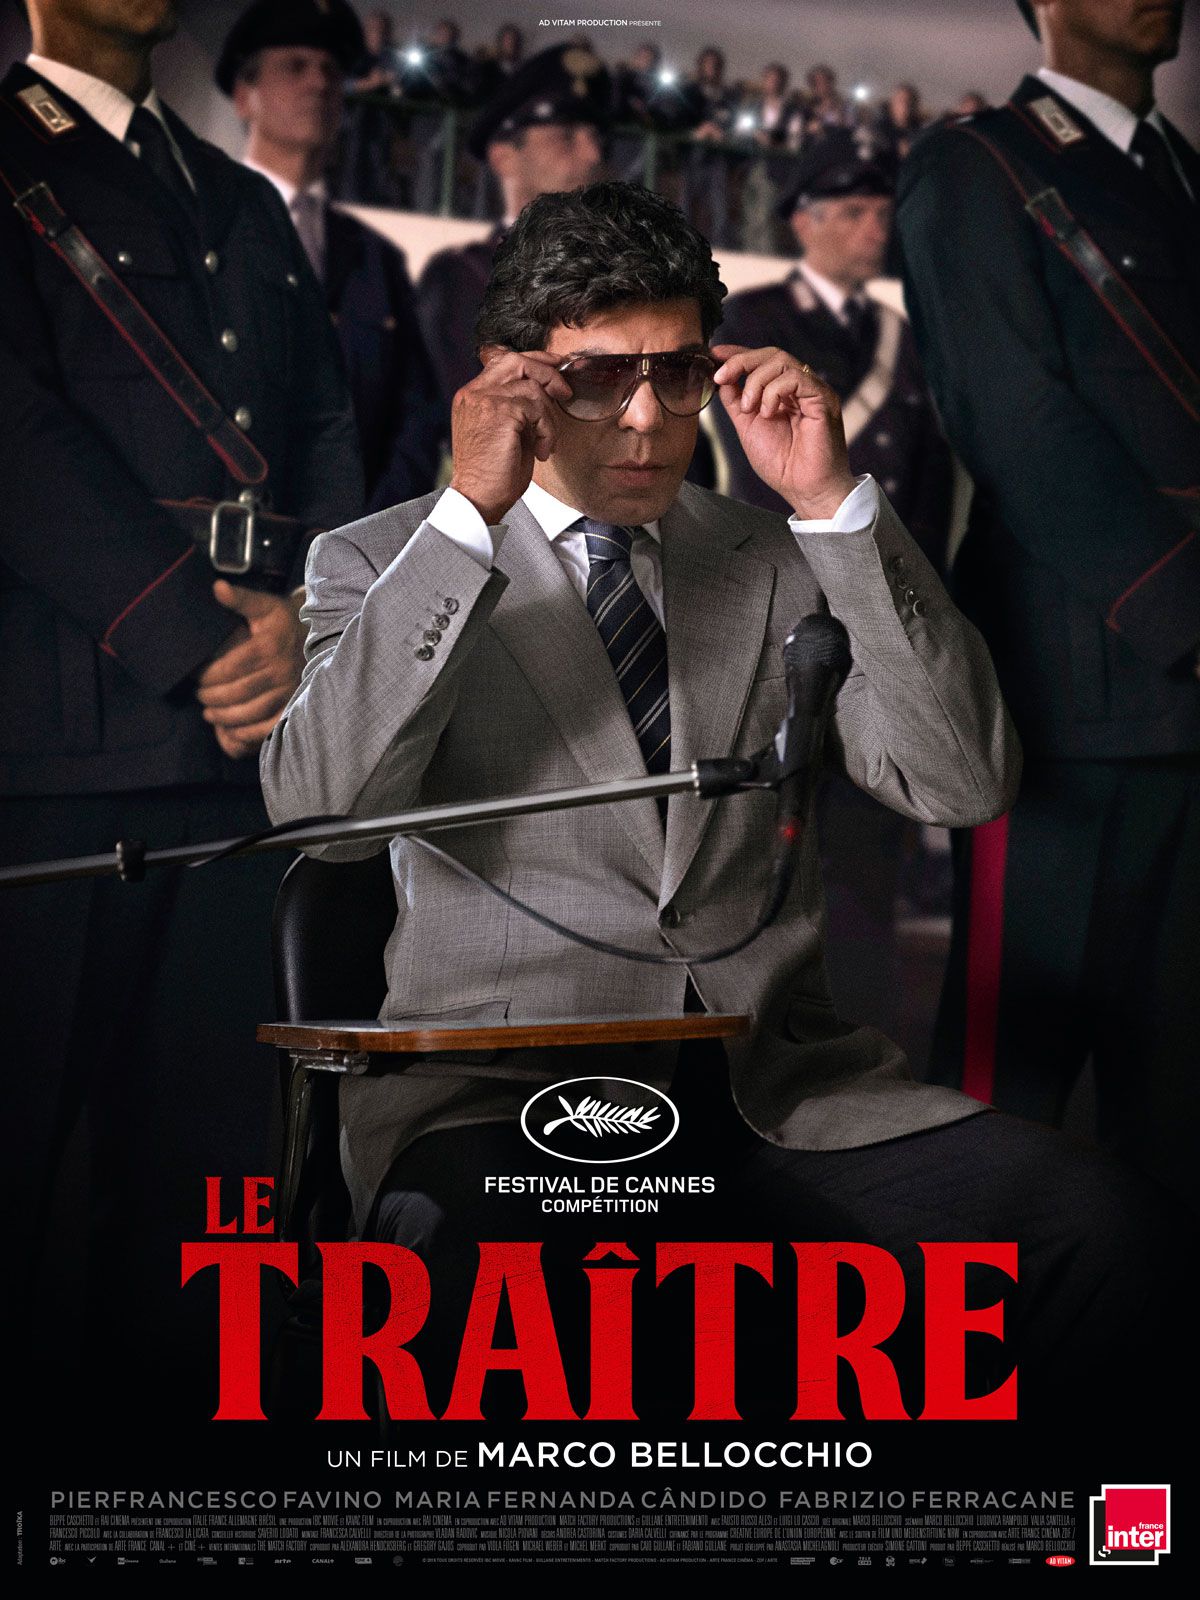 Le Traître - Film (2019) streaming VF gratuit complet